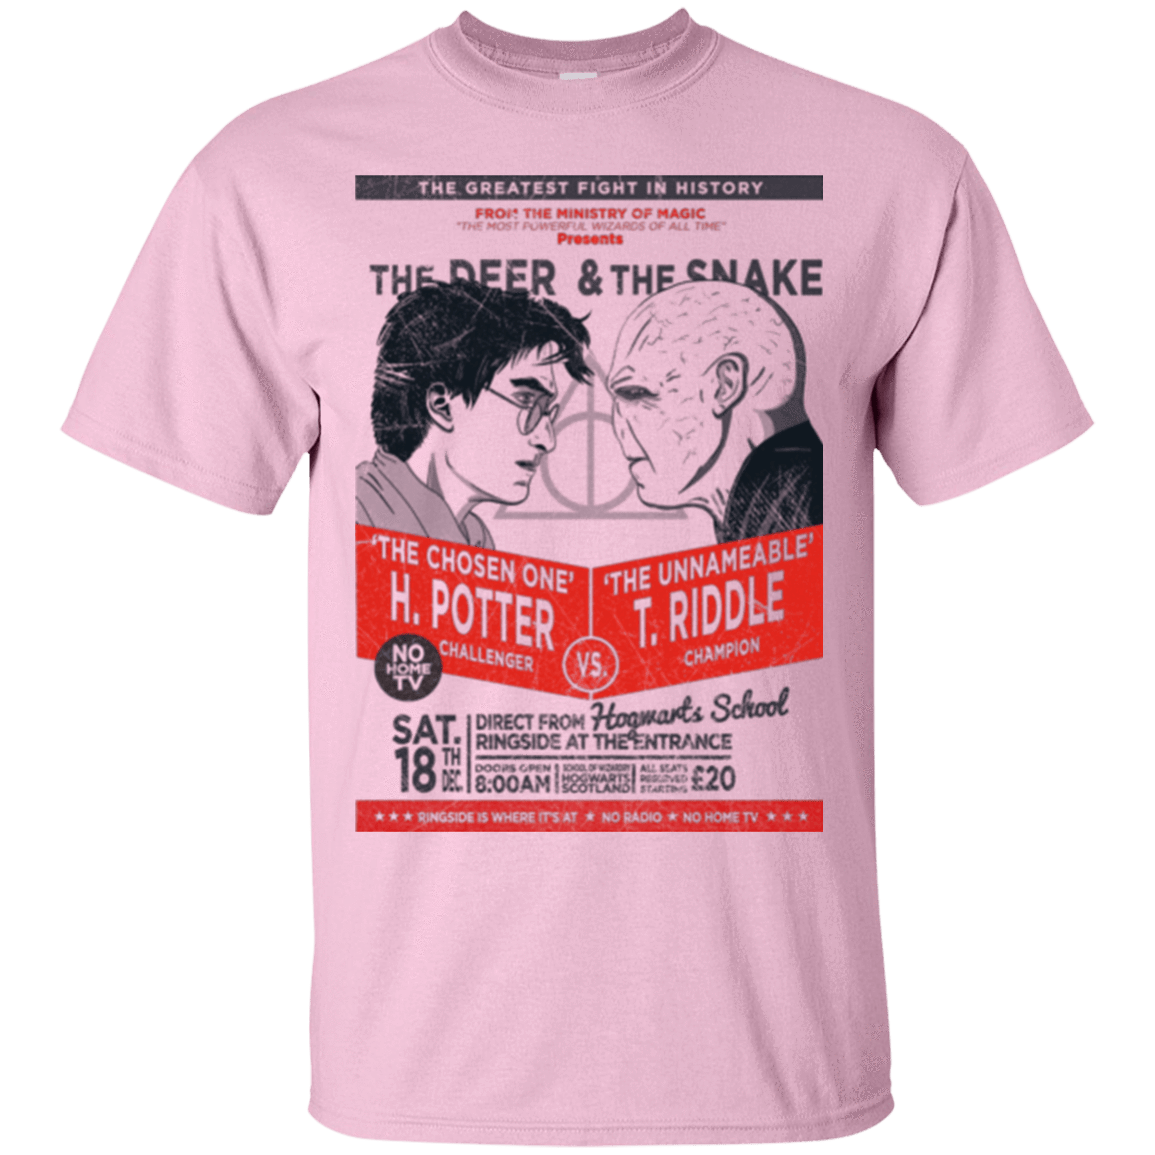 T-Shirts Light Pink / Small The Deer vs The Snake T-Shirt